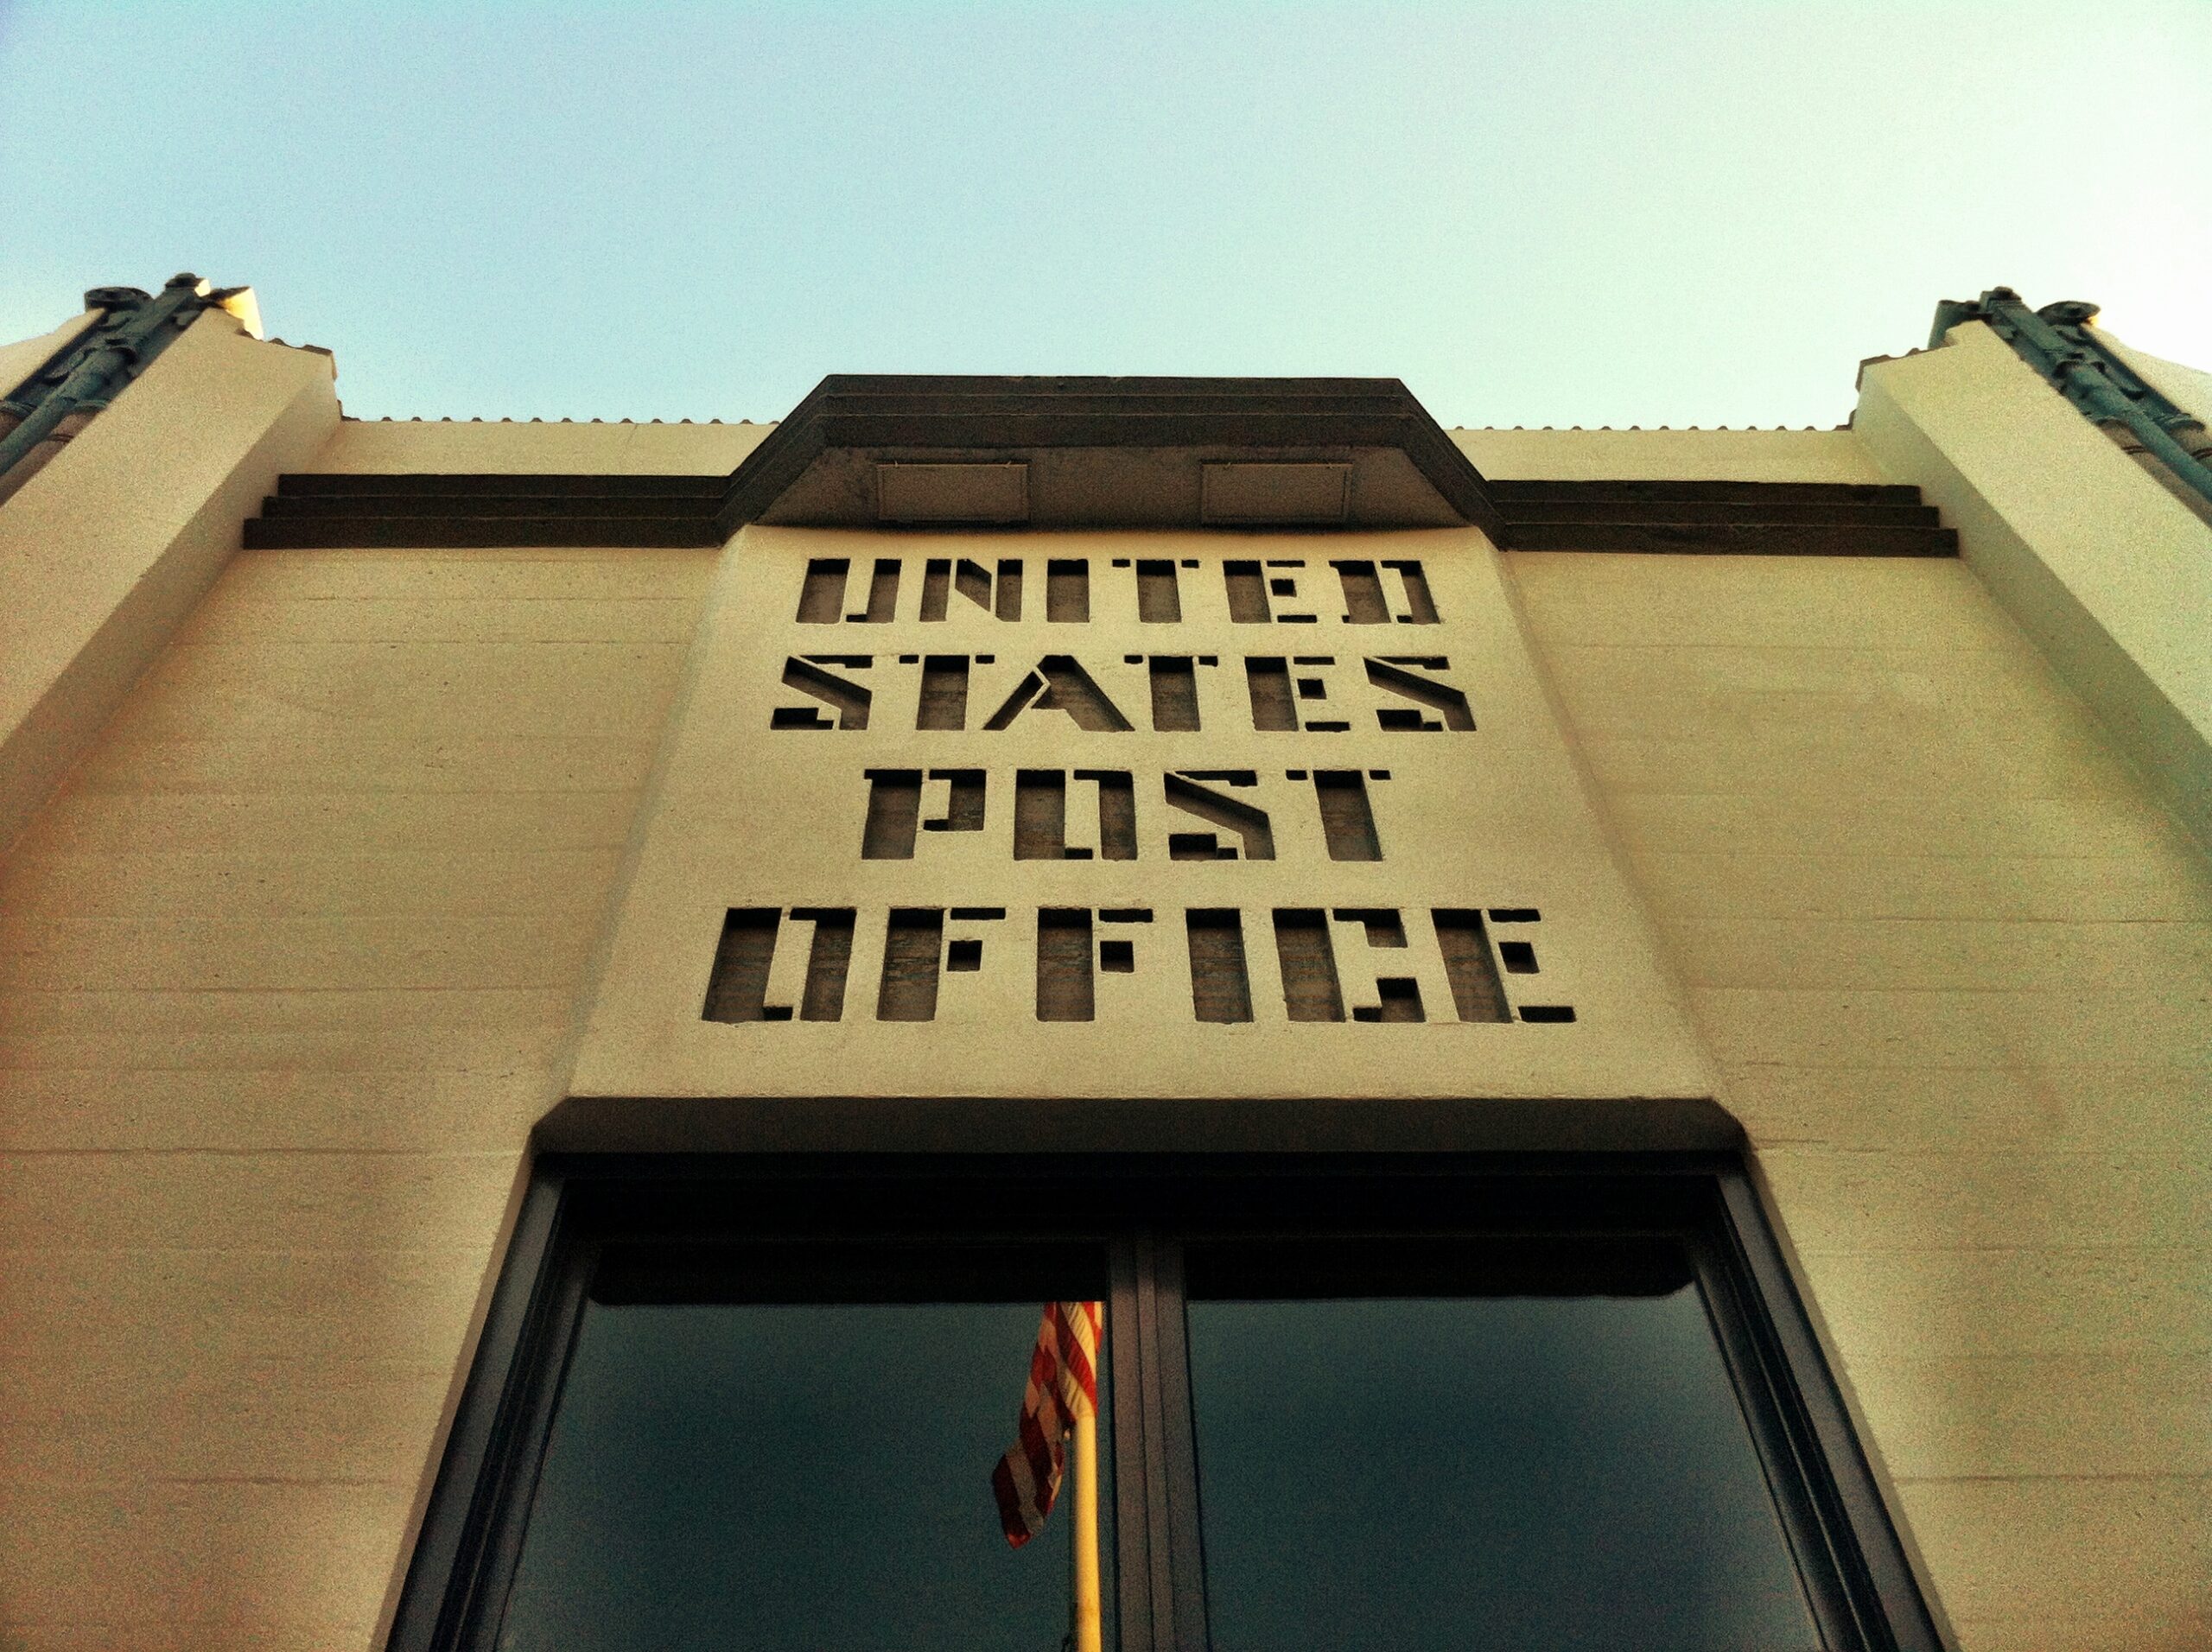 Santa Monica Post Office